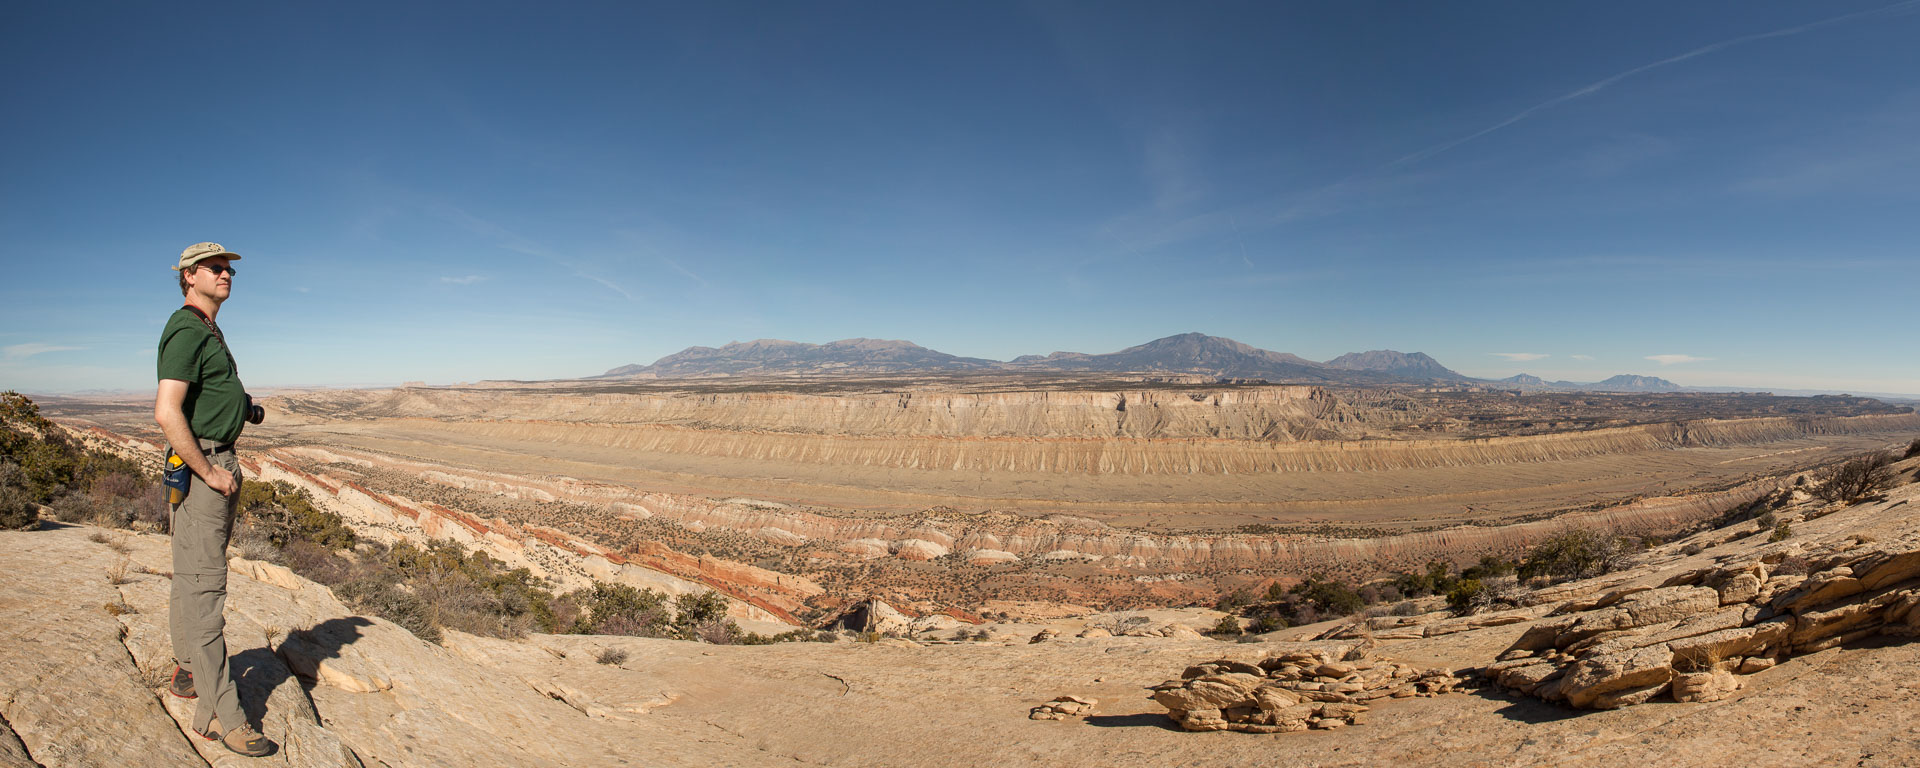 upper muley twist panorama from rim